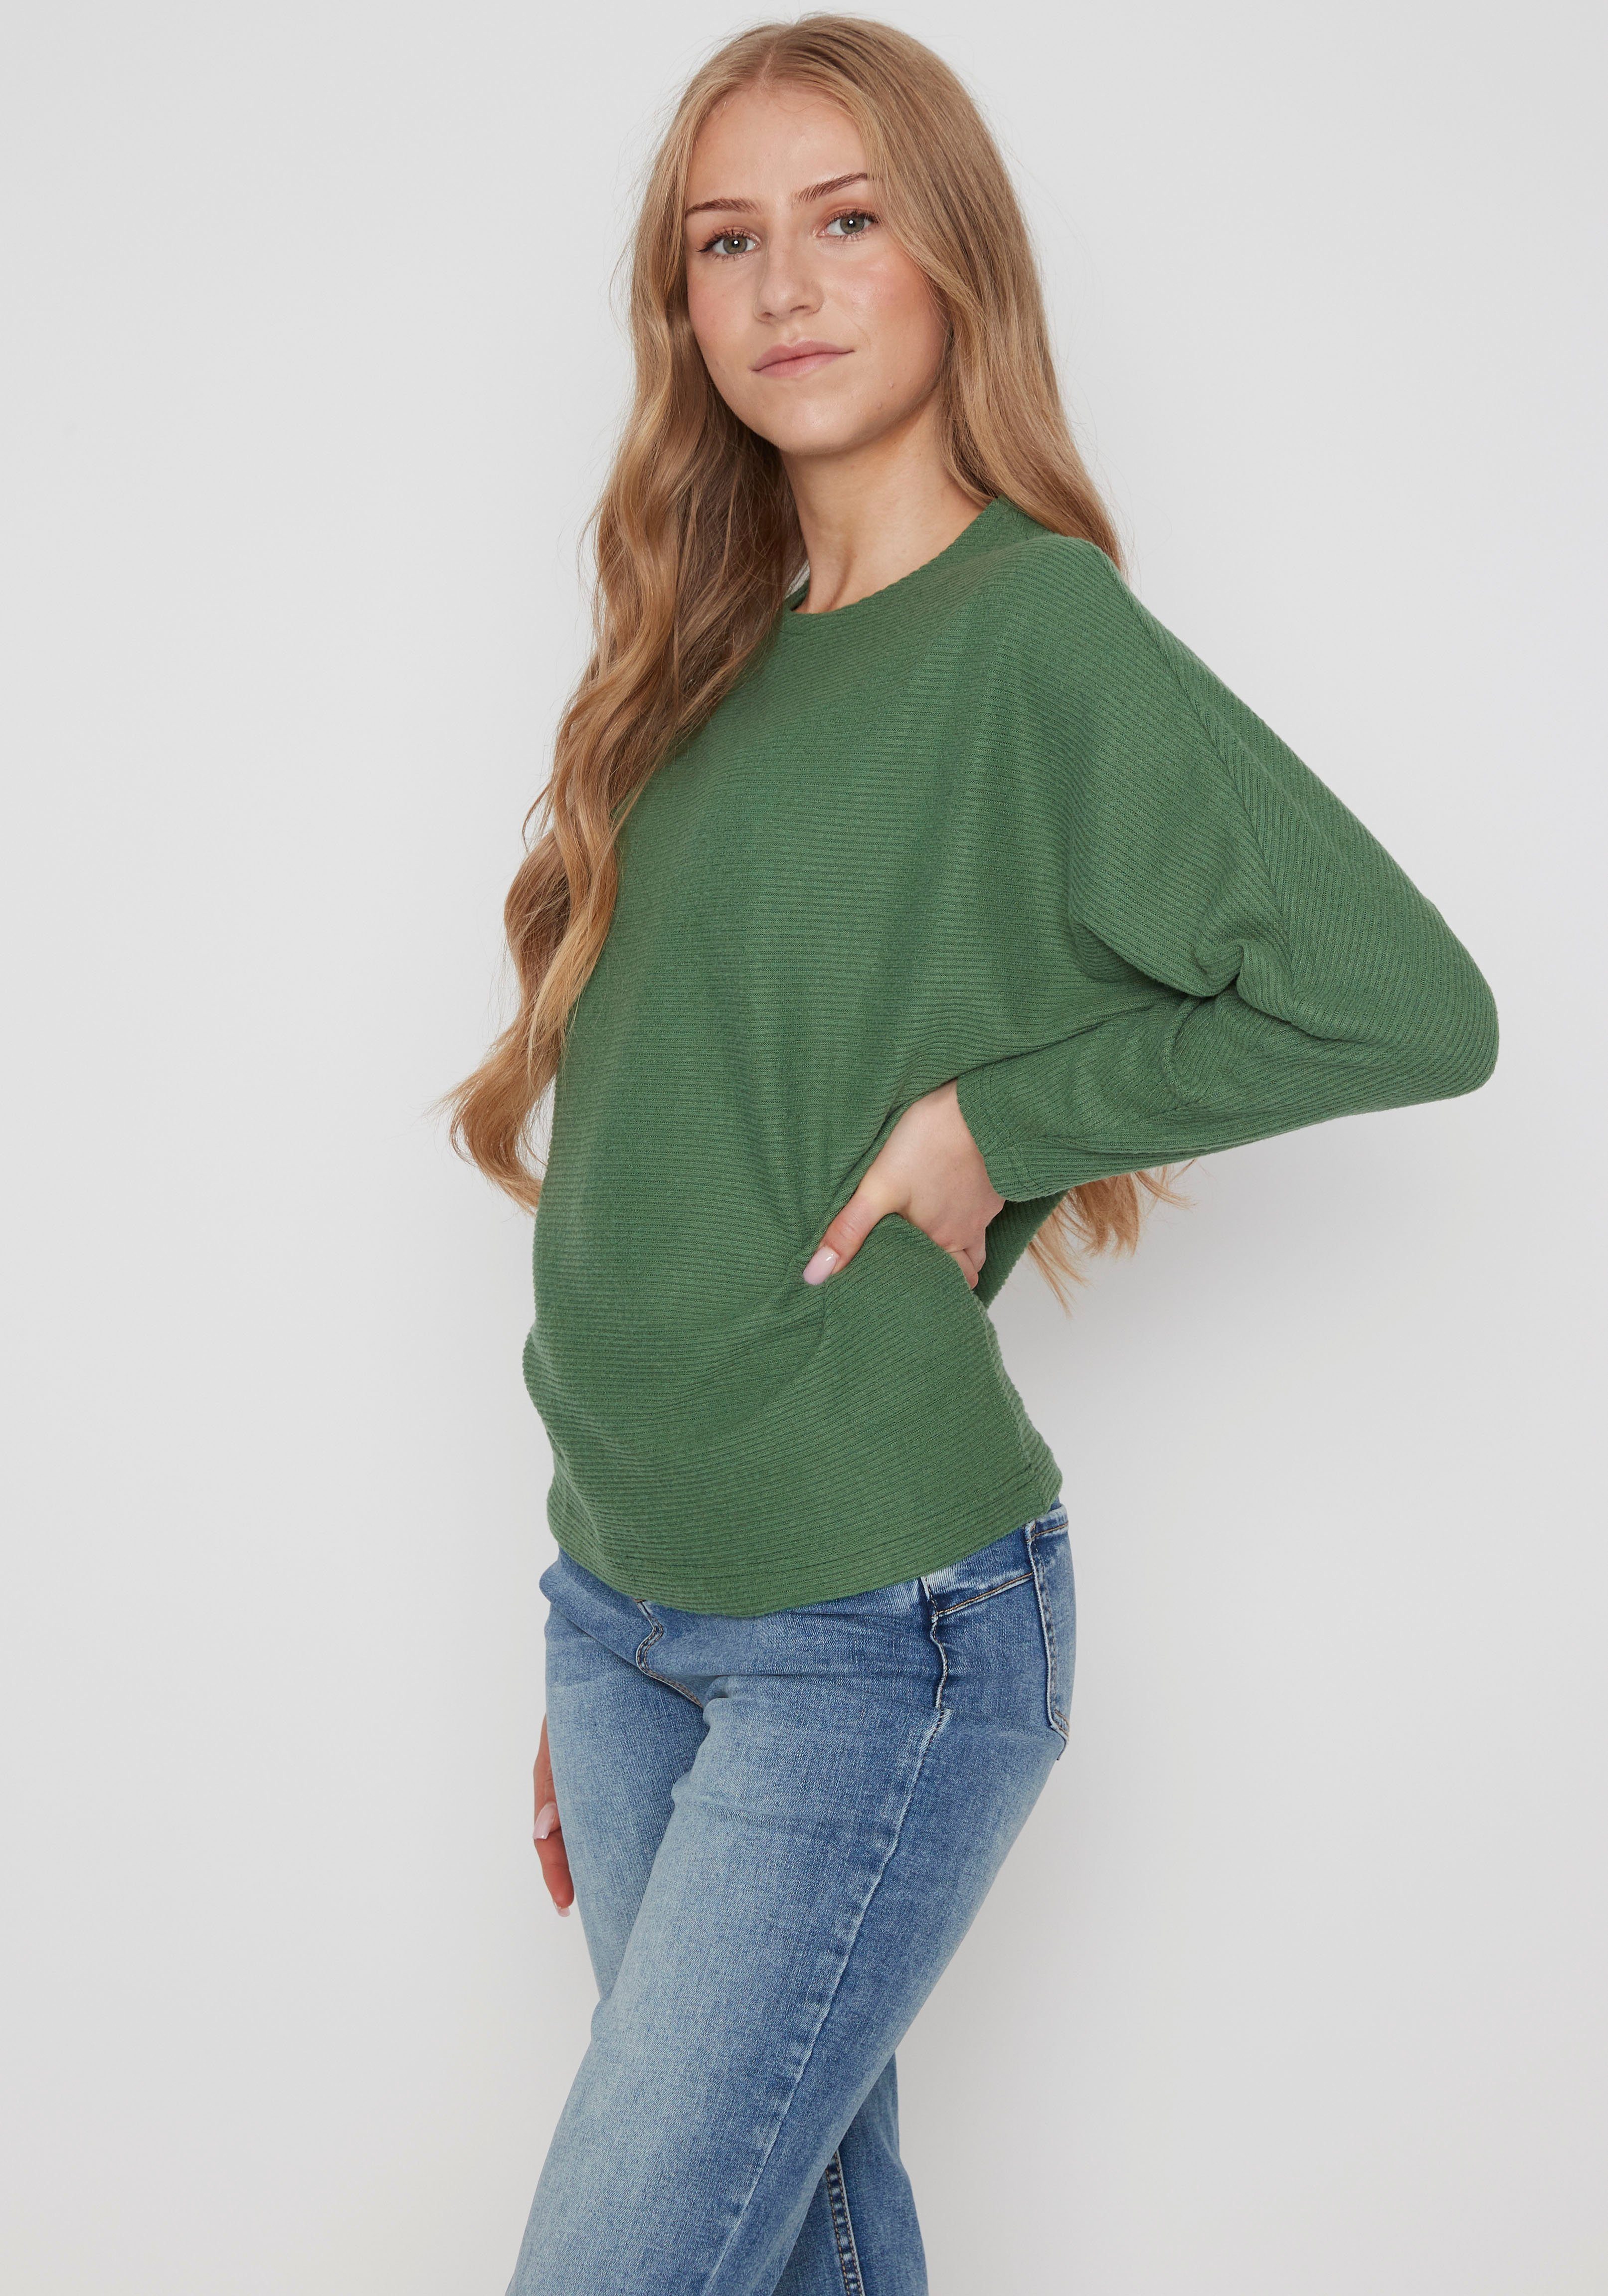 HaILY’S T-Shirt TP P marl green fern Ma44ira LS